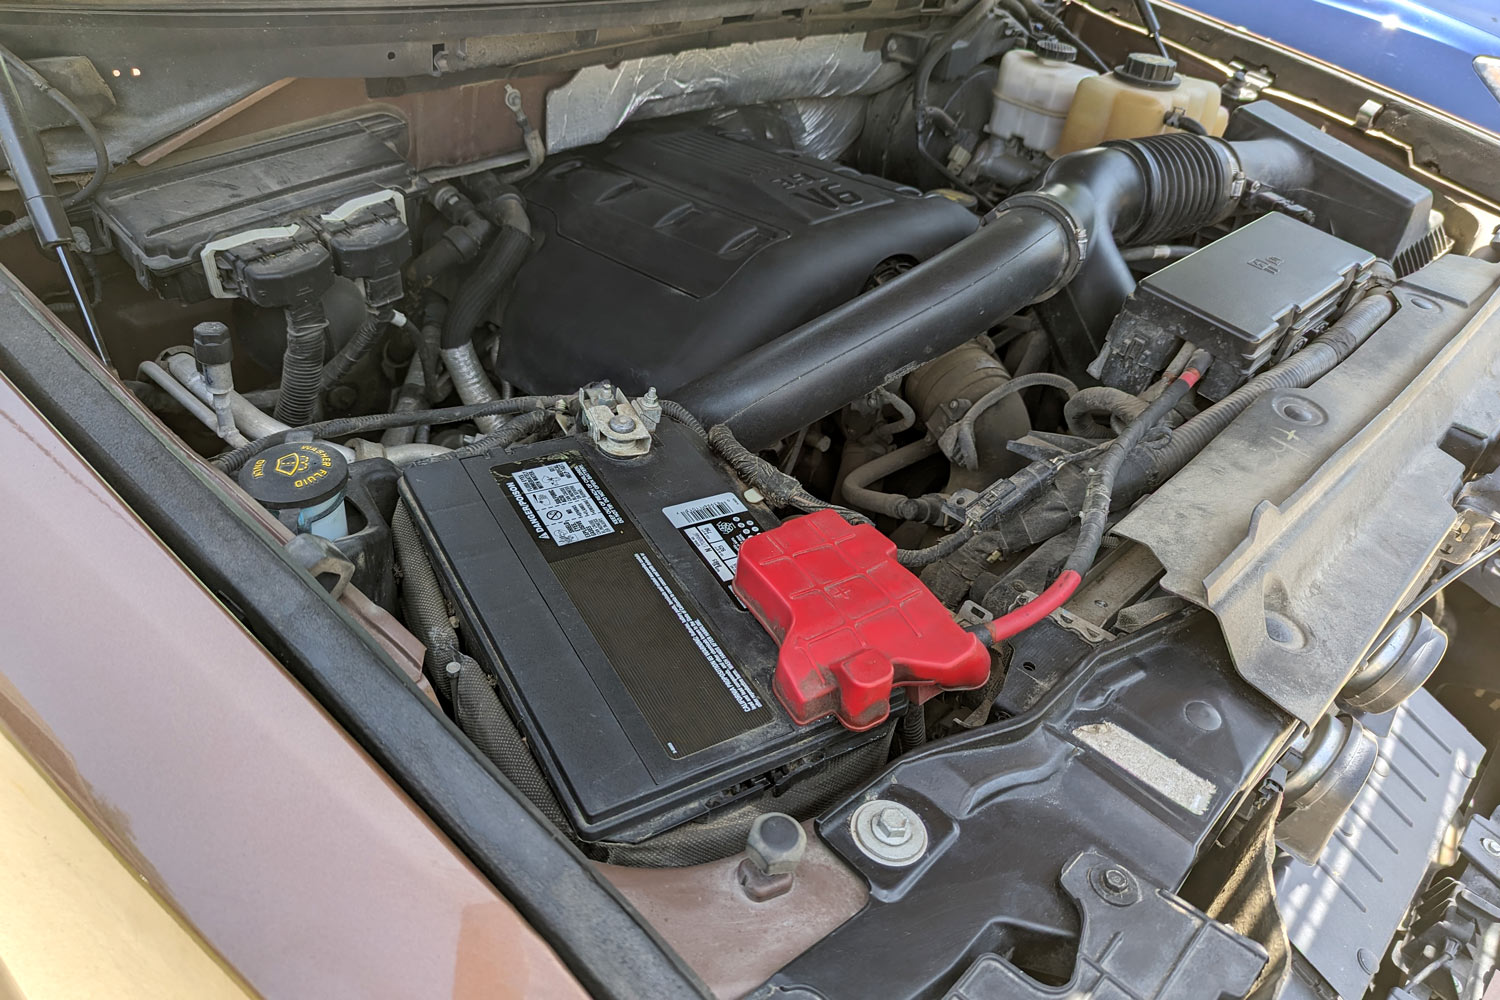 Battery under hood of brown pickup truck.